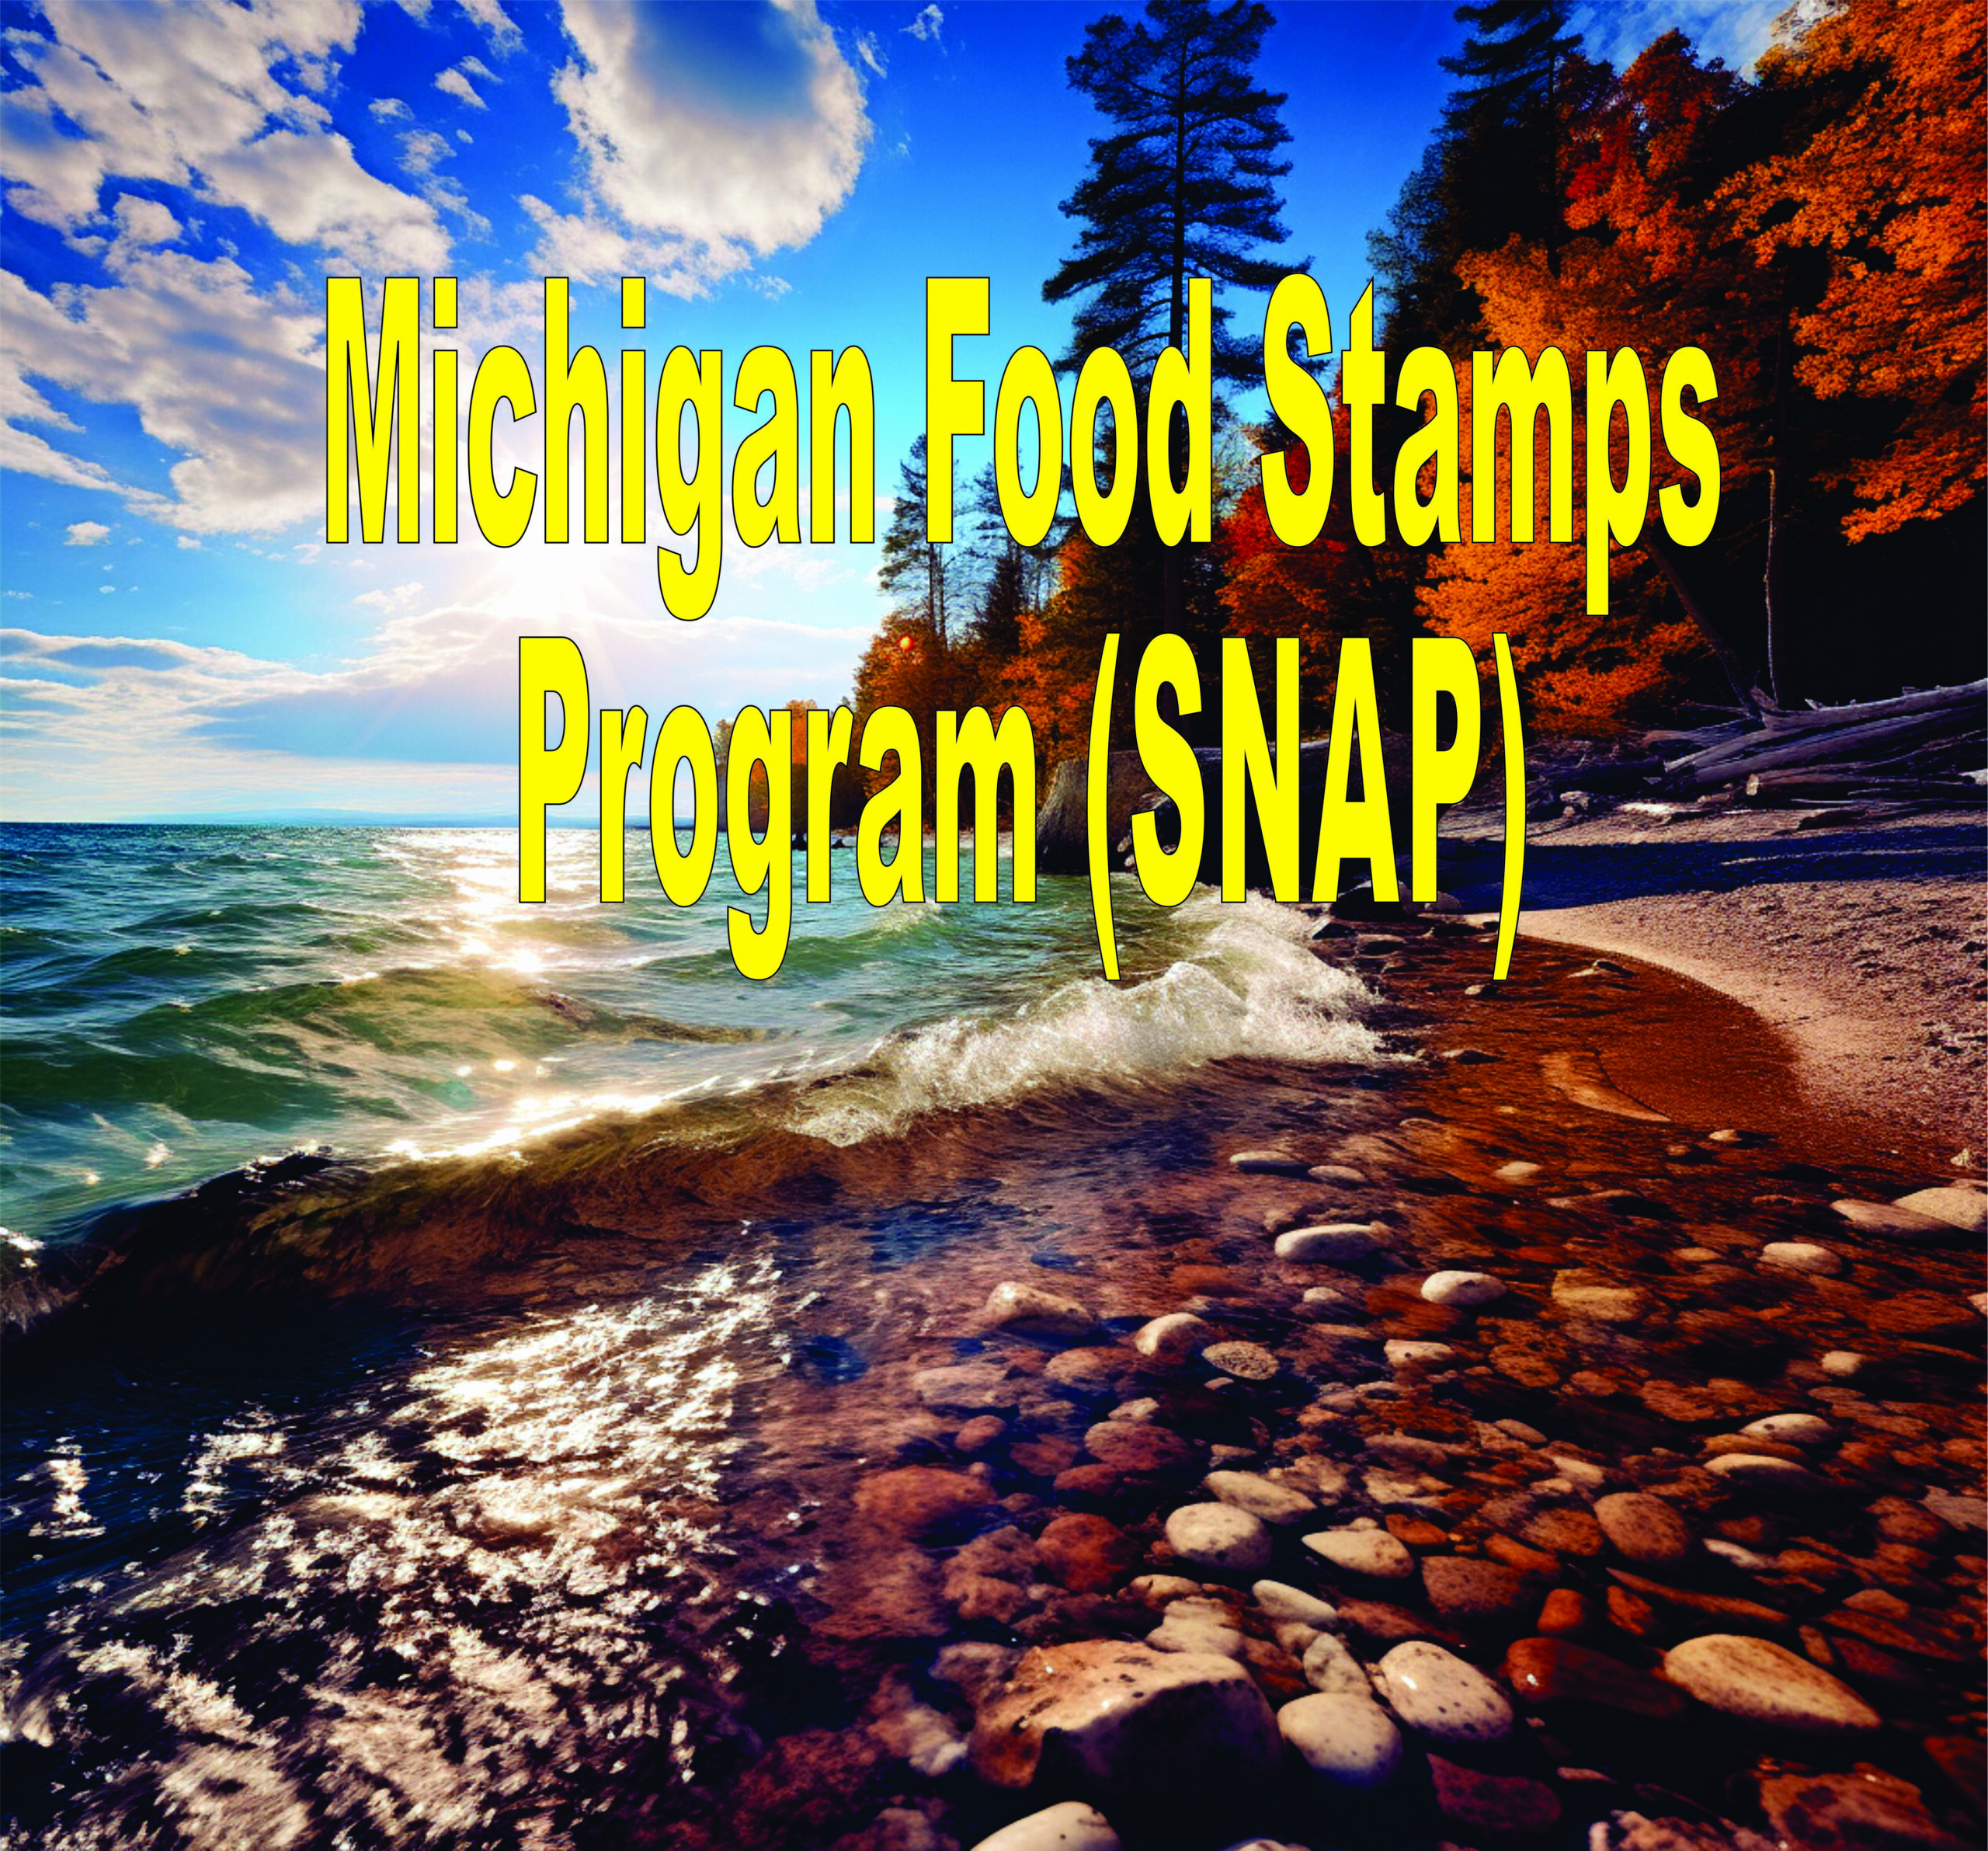 Michigan Food Stamps Program (snap)